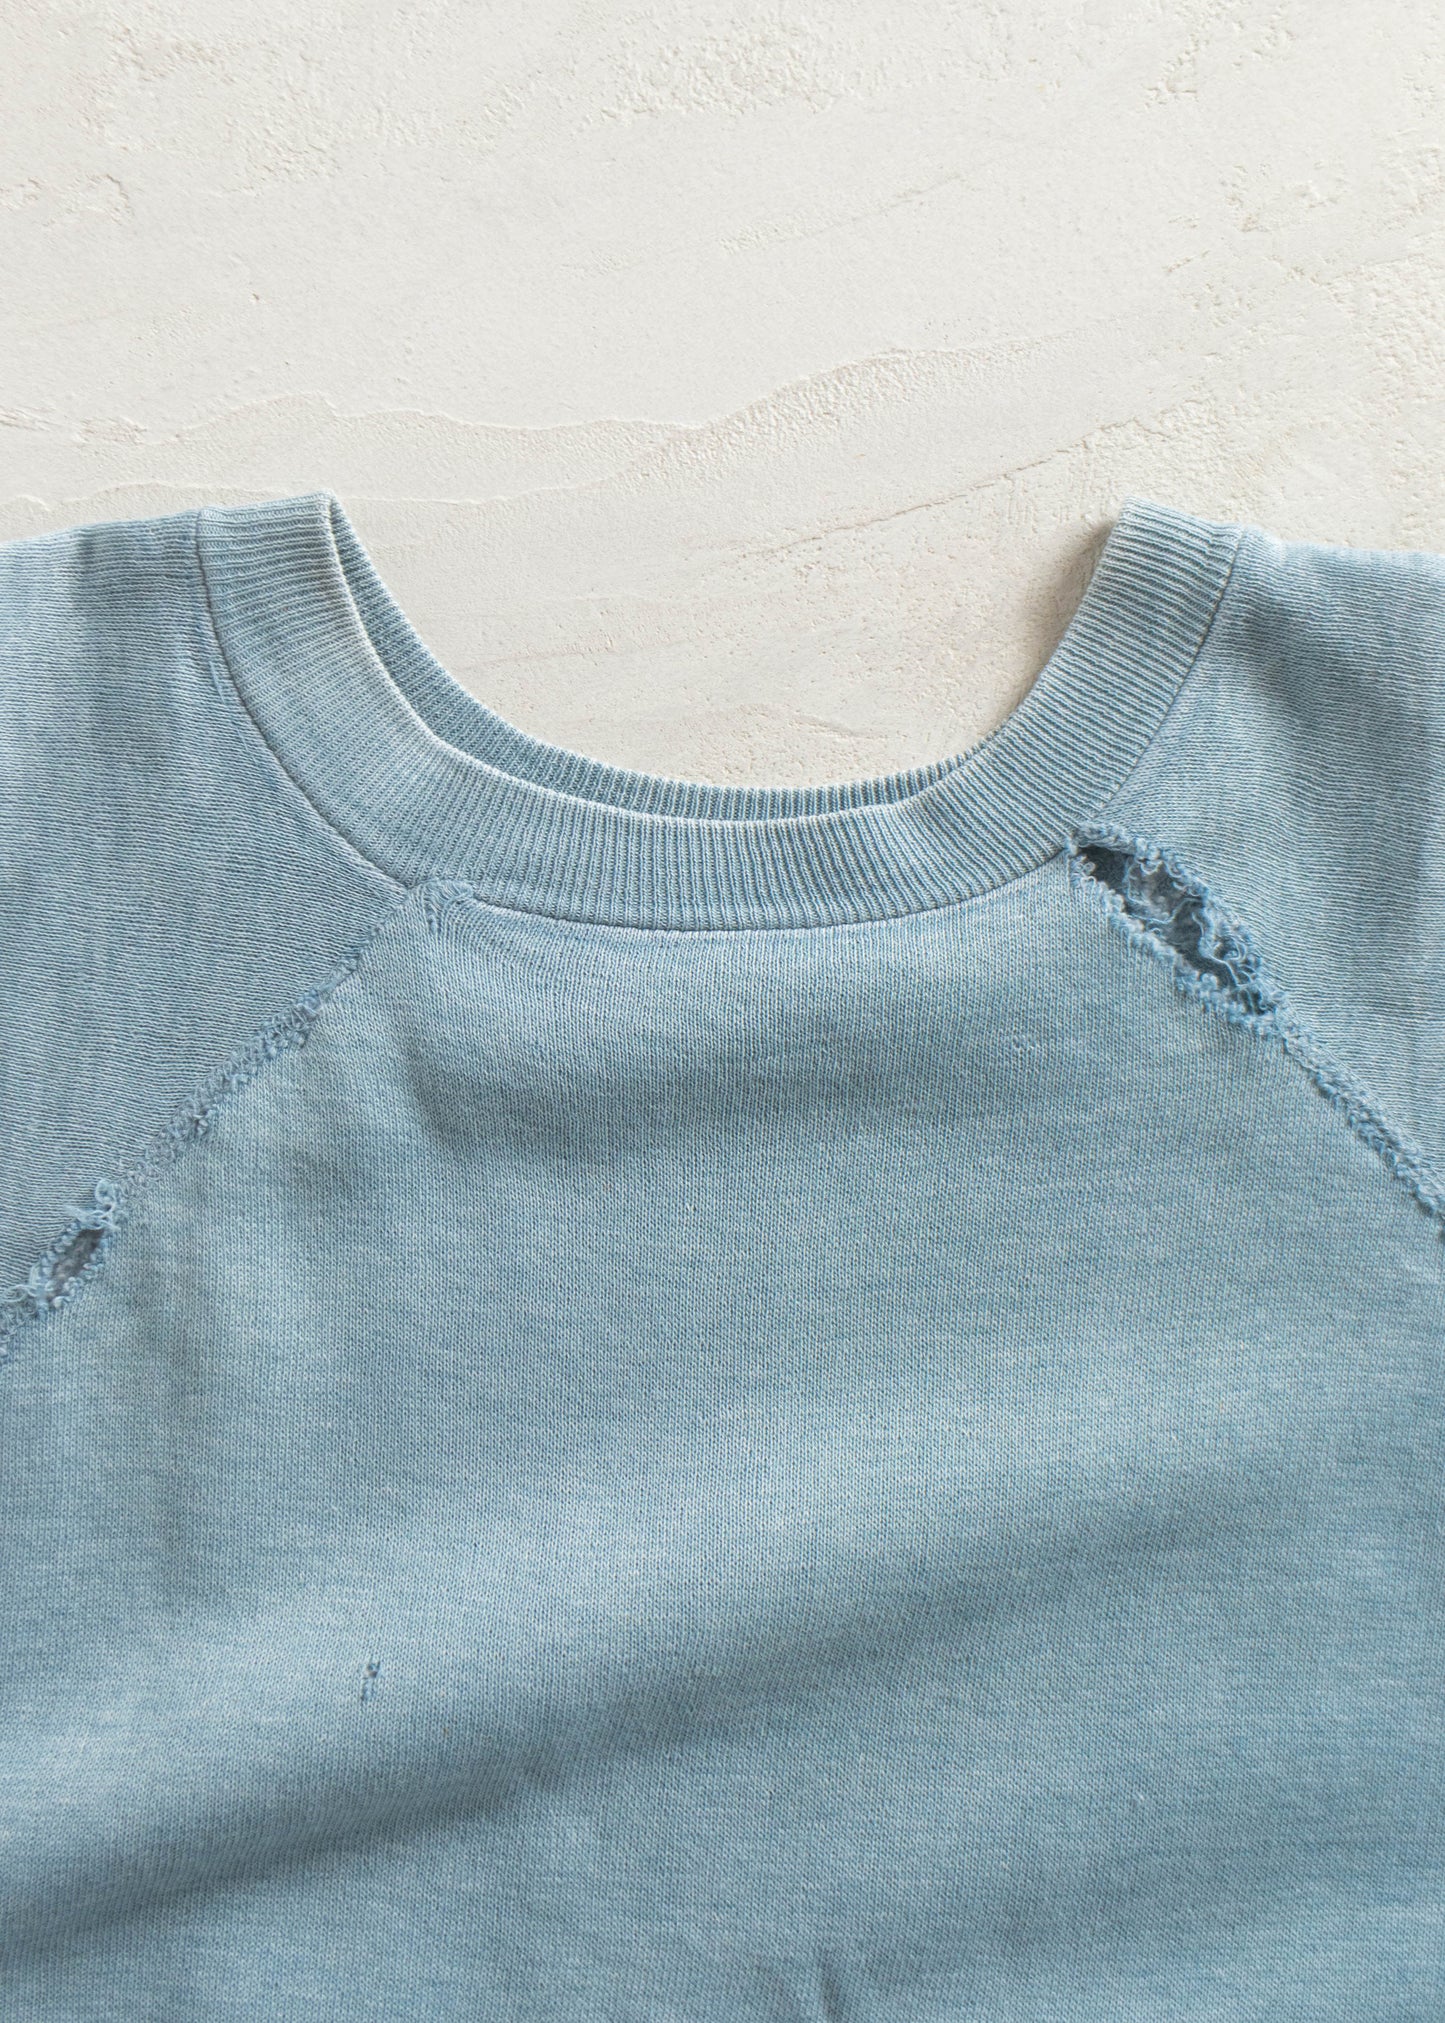 Vintage 1970s Short Sleeve Sweatshirt Size XS/S